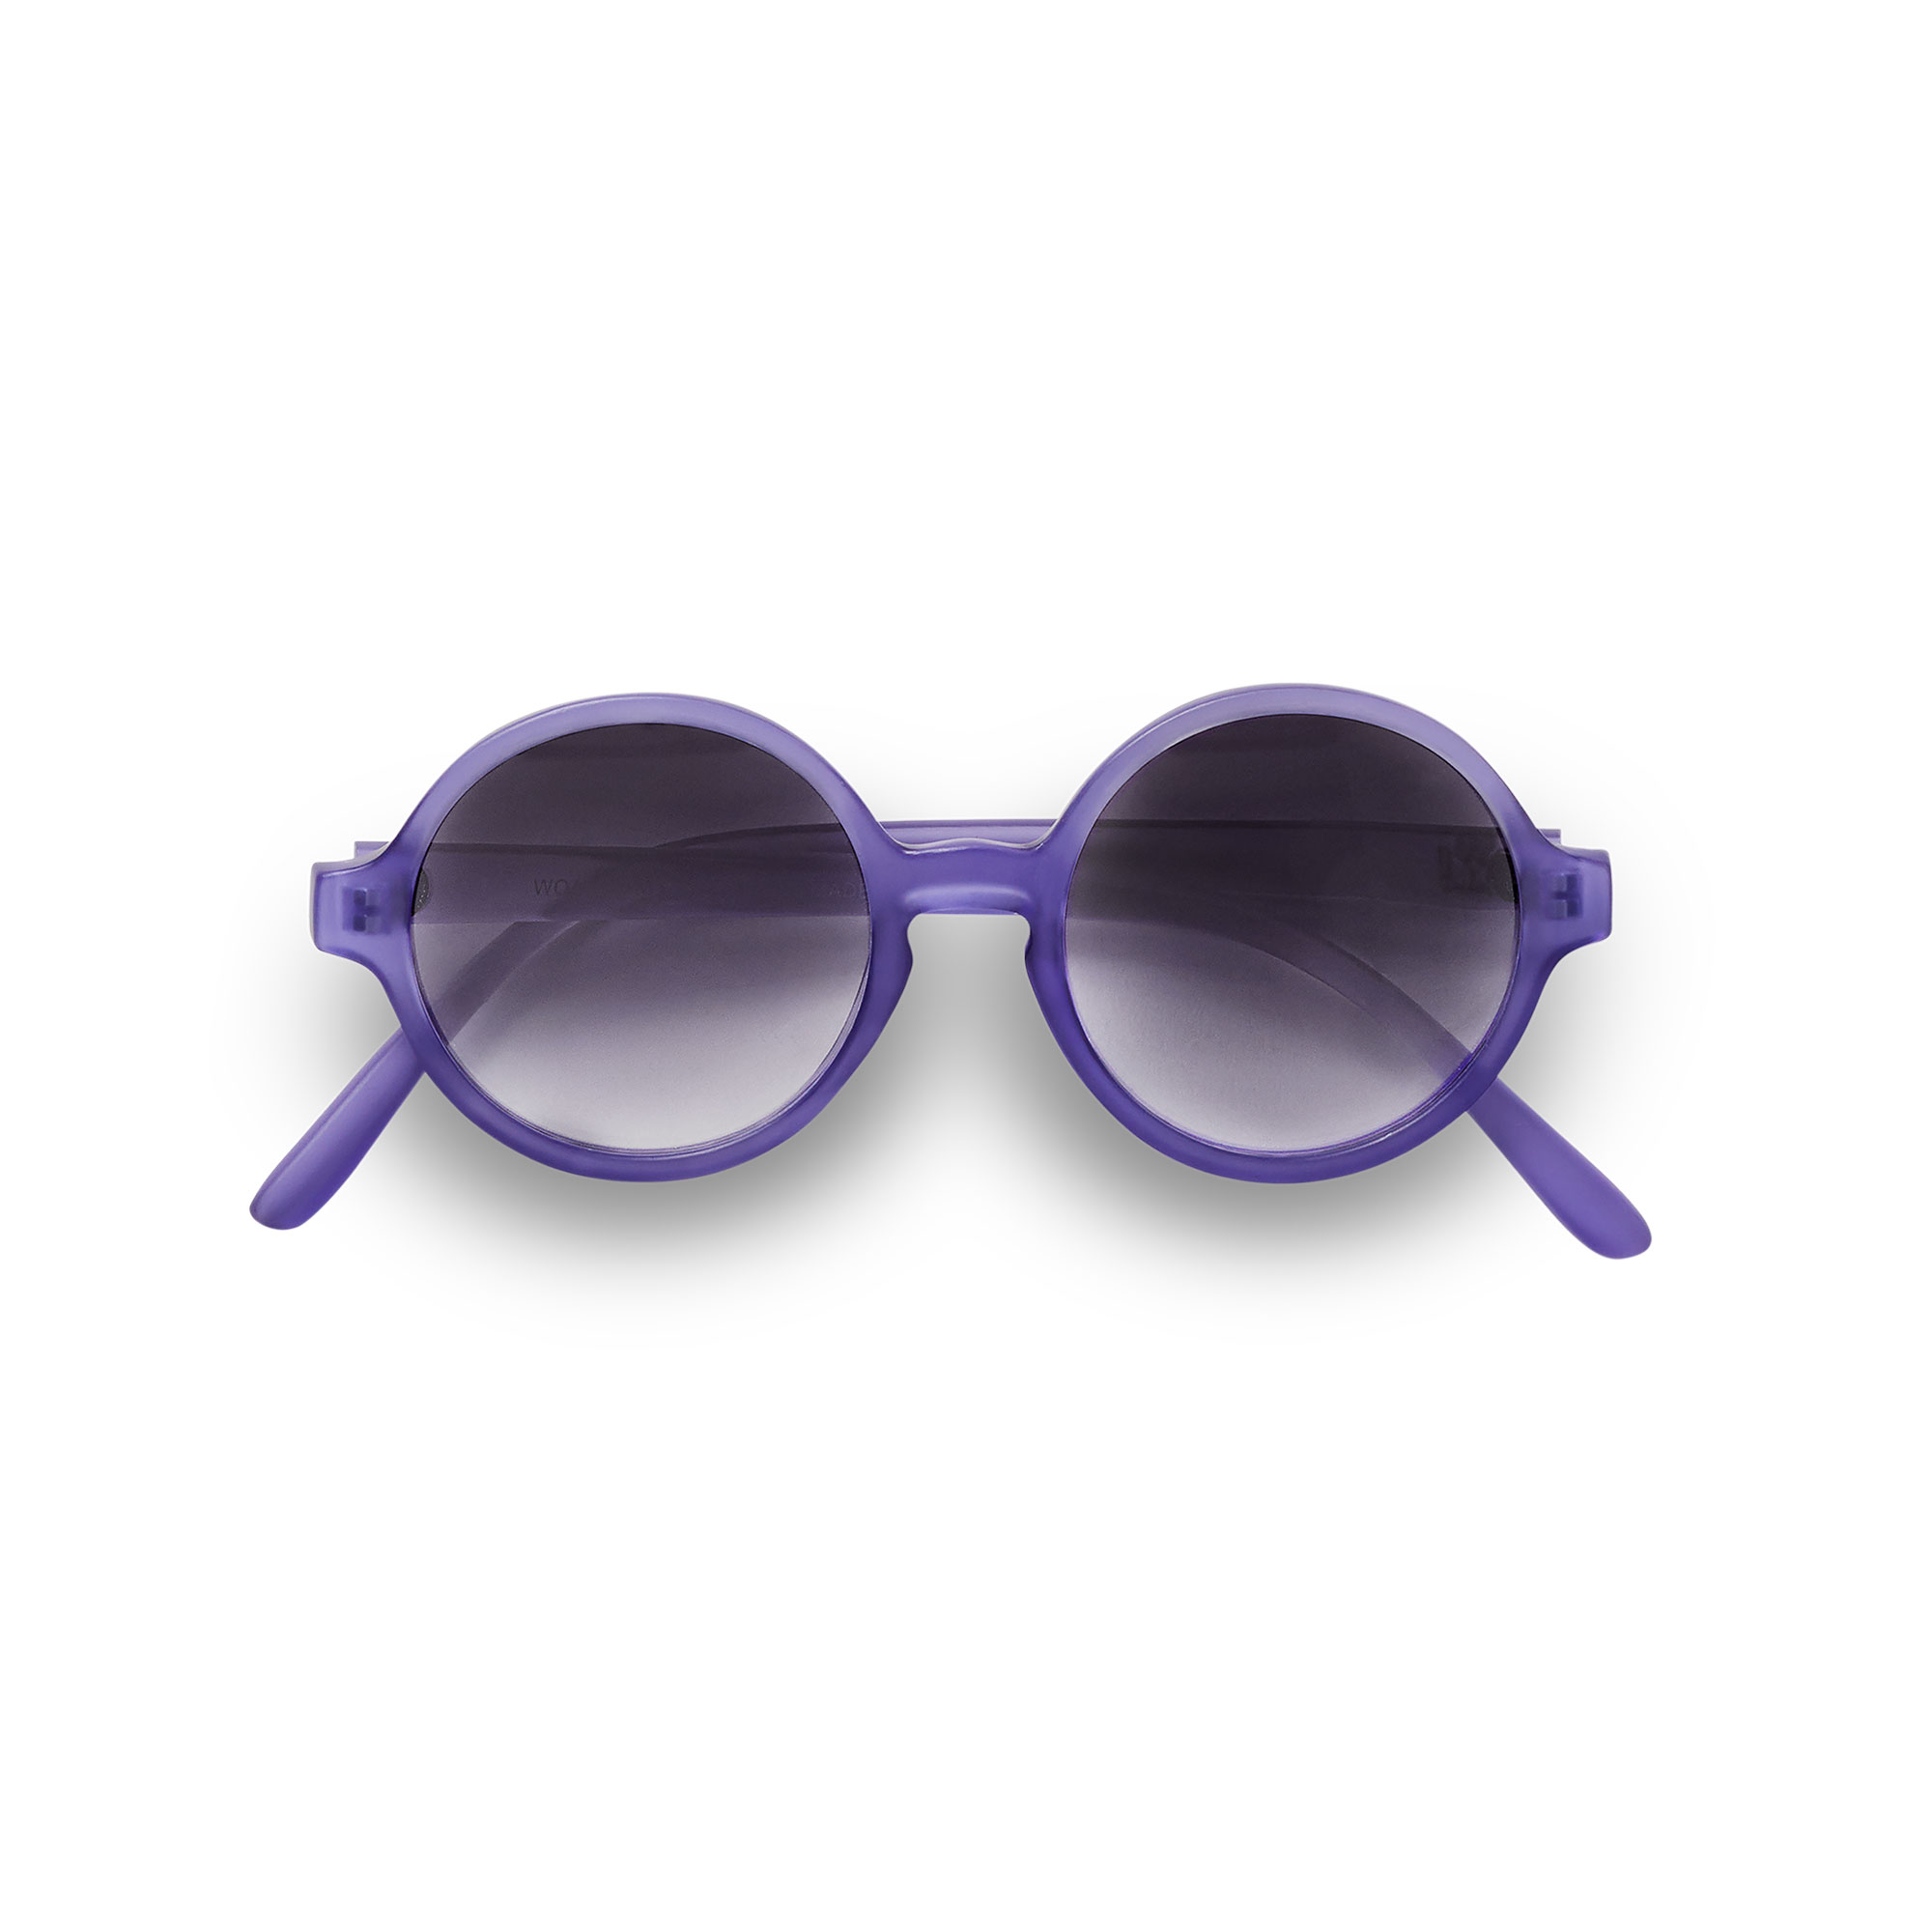 KIETLA WOAM slnečné okuliare pre dospelých- purple